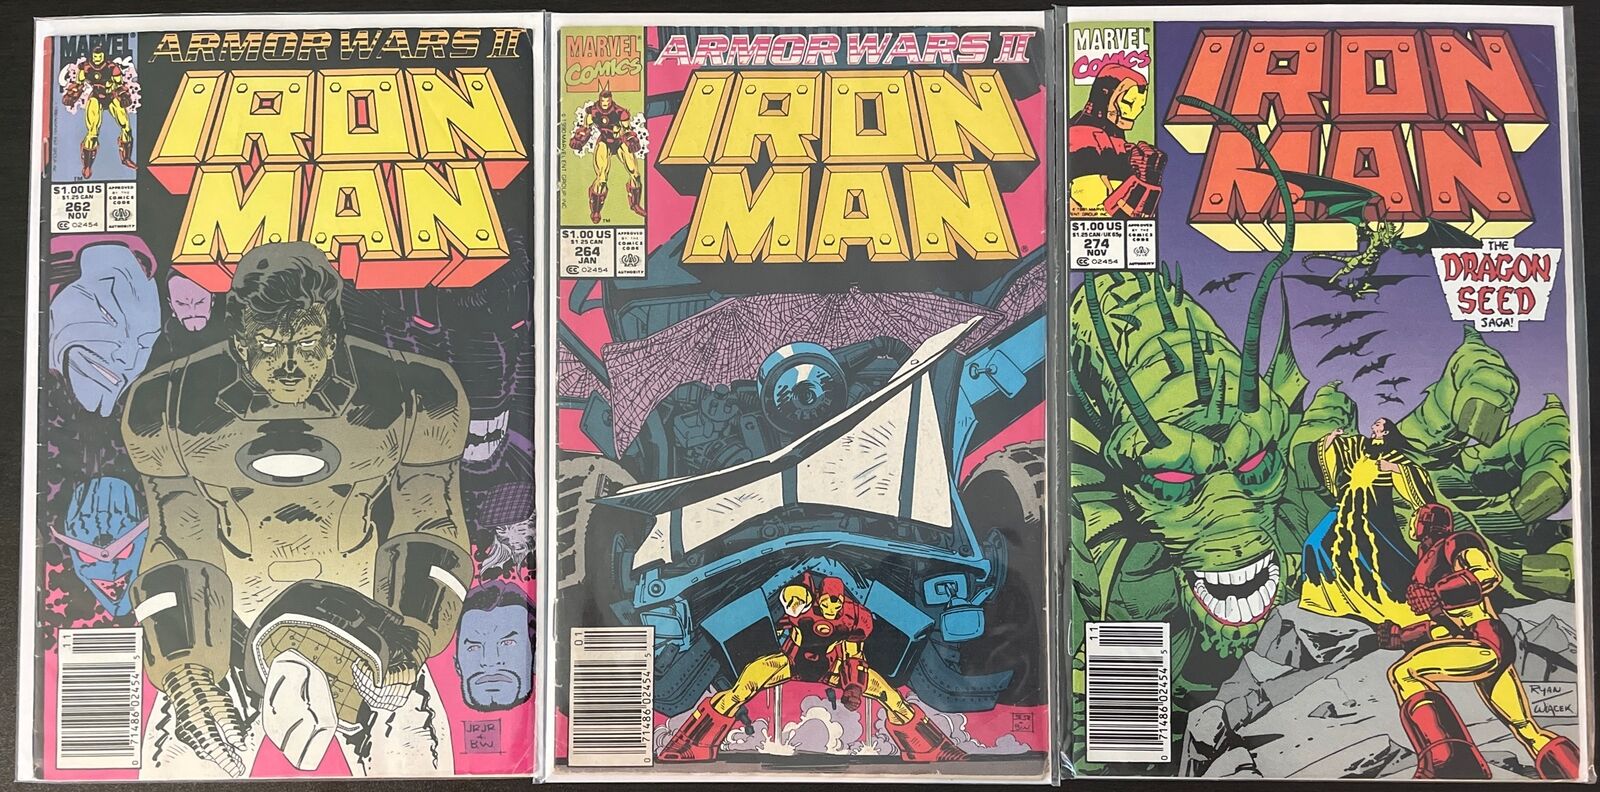 Iron Man # 262 264 274 (1990) Newsstand Edition Vol 1 Marvel Comics Lot 3 JR/JR